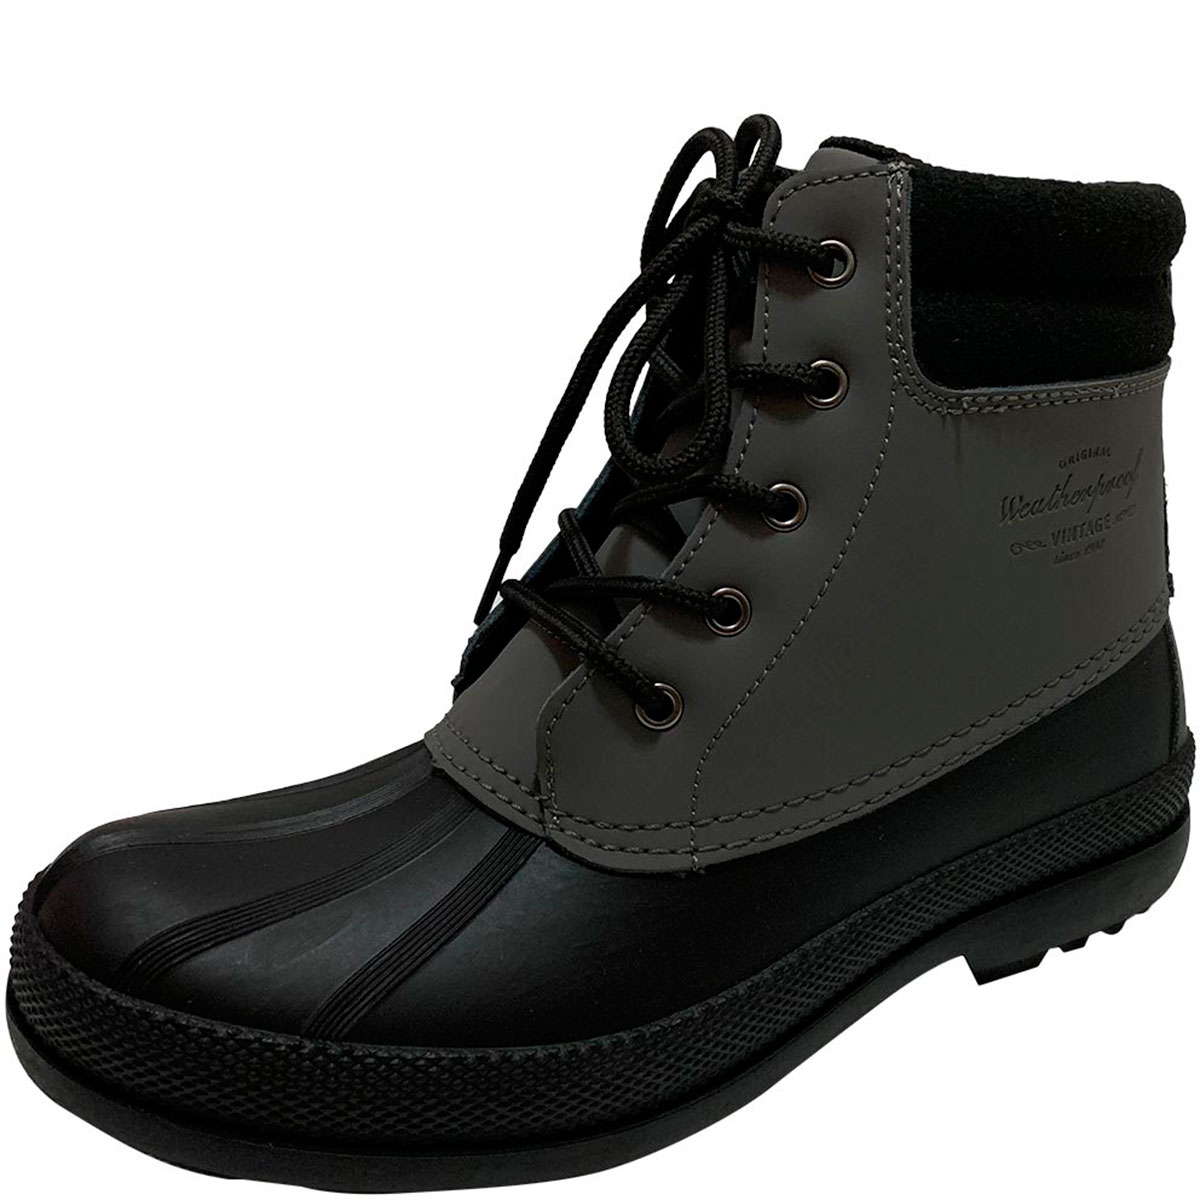 Weatherproof Vintage Men's Luke Commuter Grey Leather Boots 10M MSRP 90 ...